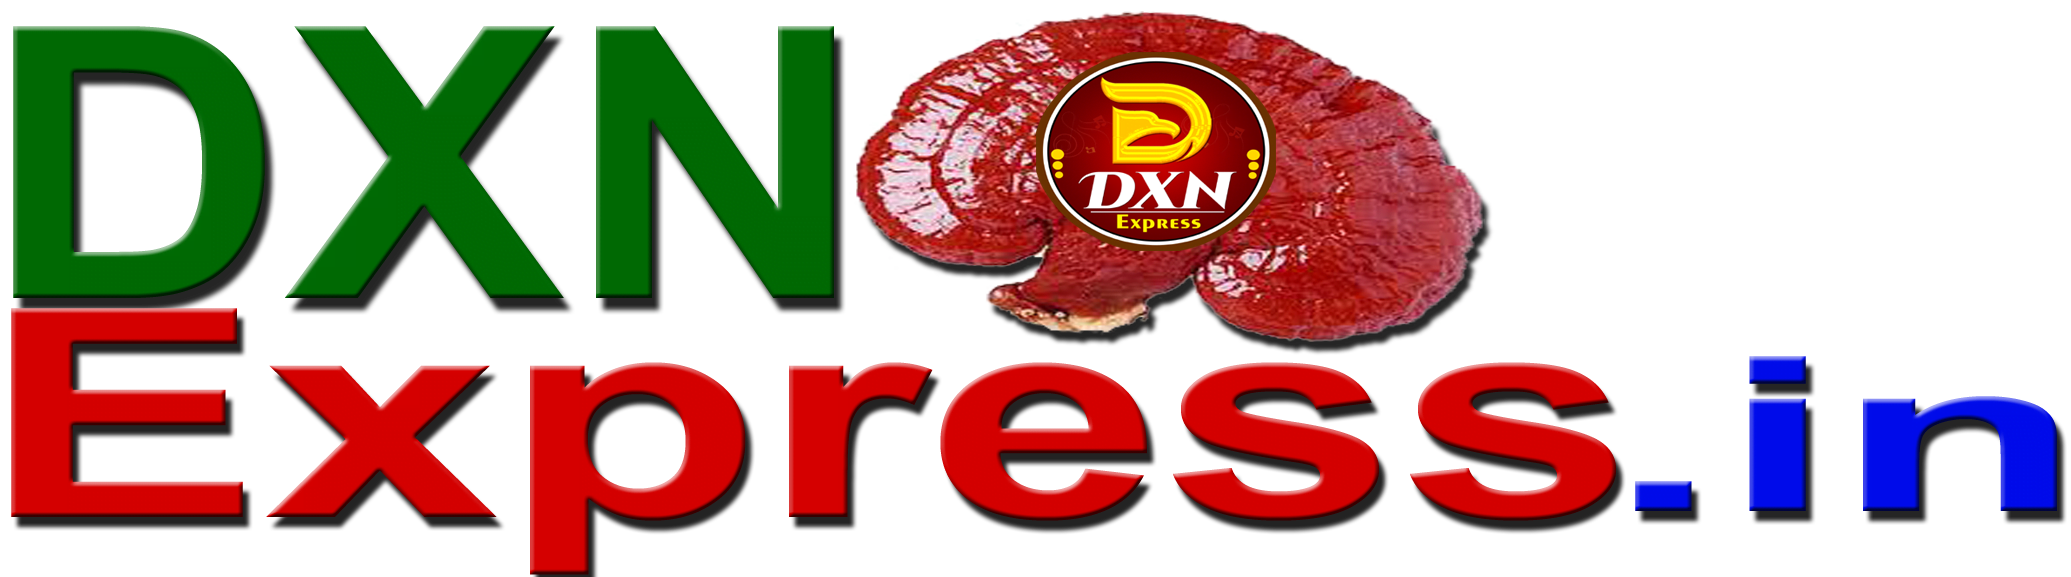 HWH TALKS - Dxn Logo Explained Good Morning Dxn | Facebook